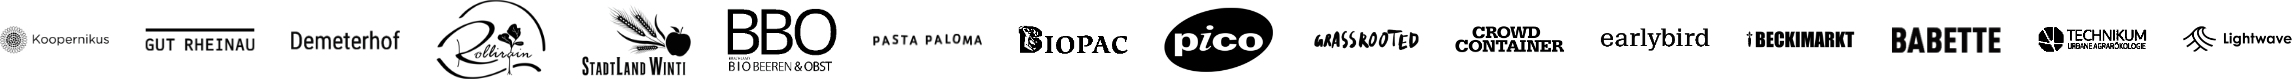 Logos Organisationen mit Koopernikus